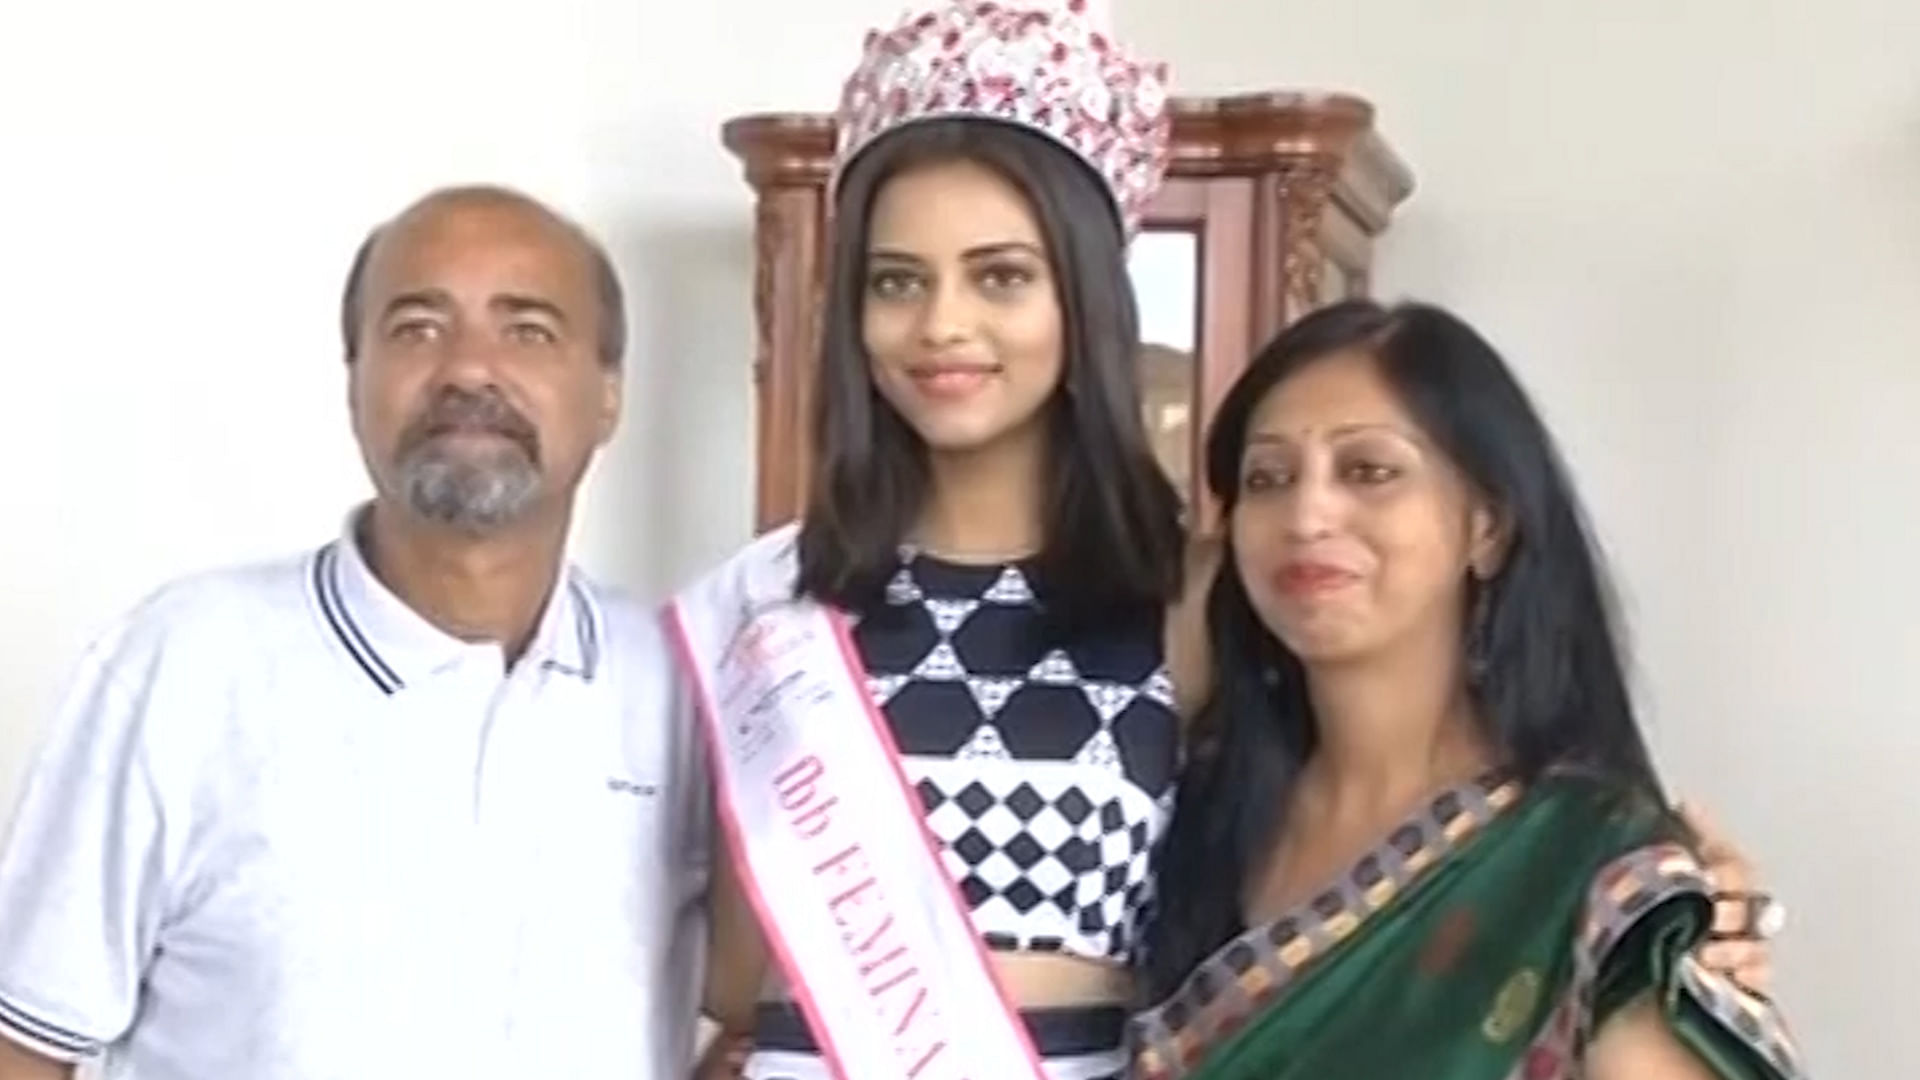  Priyadarshini Chatterjee from Guwahati, Miss India 2016. (Photo: ANI screengrab)